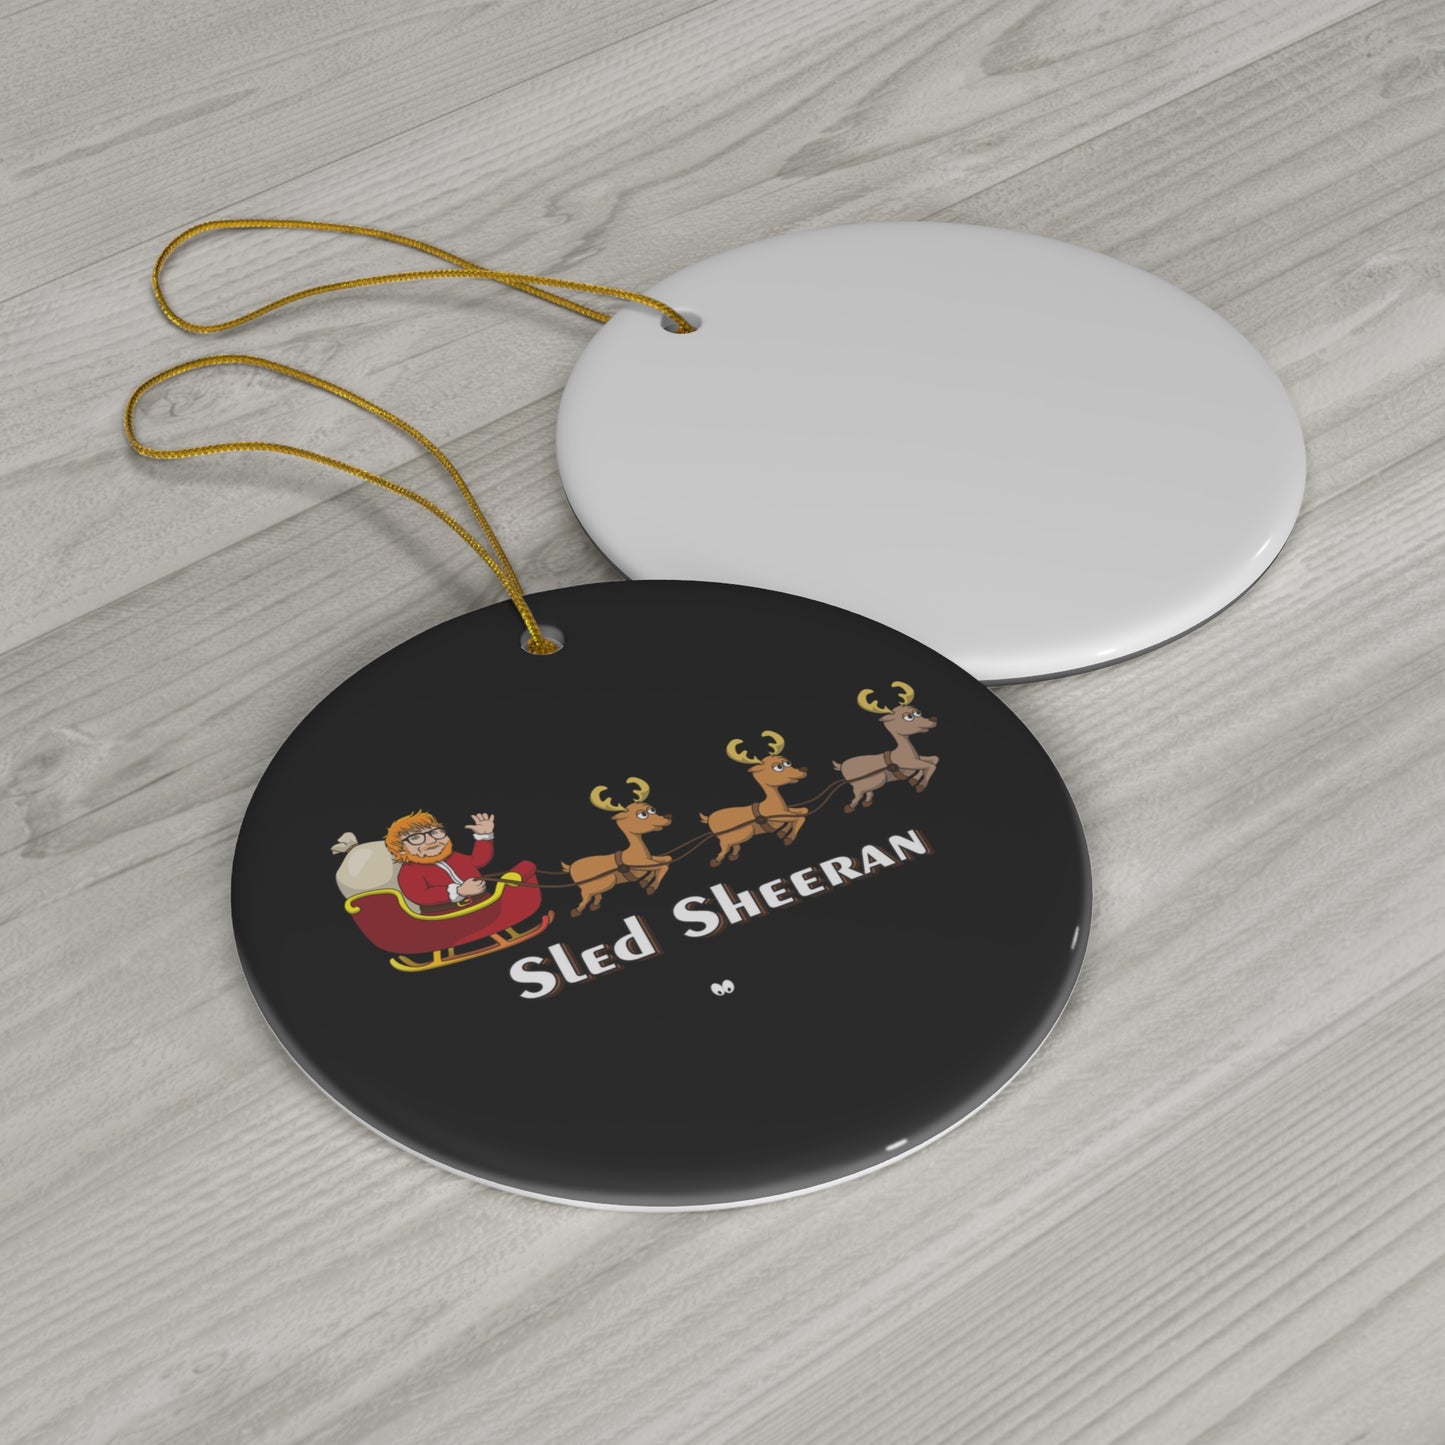 Sled Sheeran - Ceramic Ornament